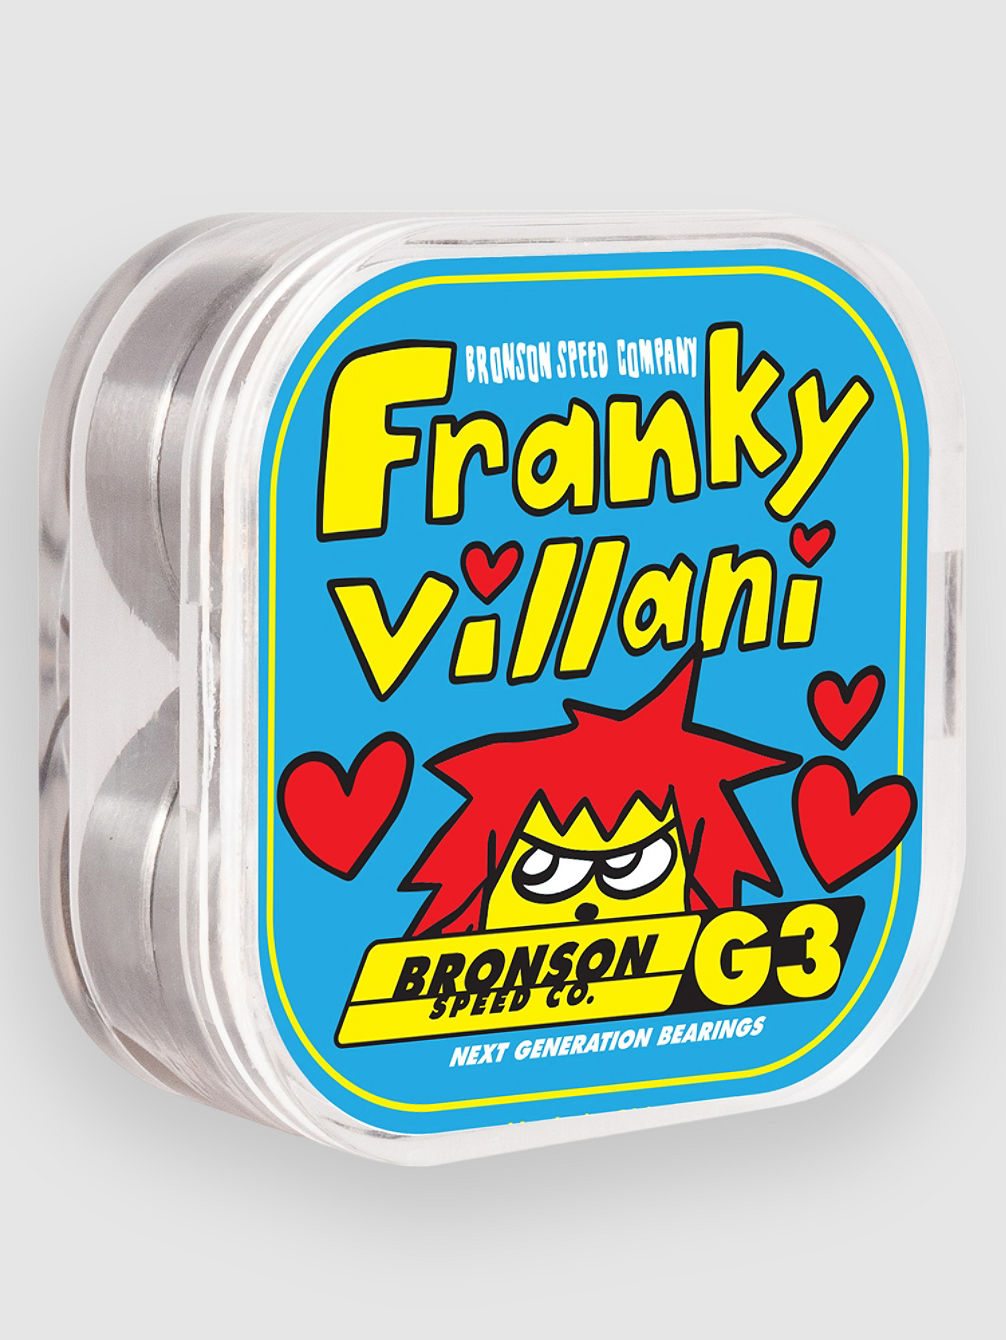 Franky Villani Pro G3 Rolamentos